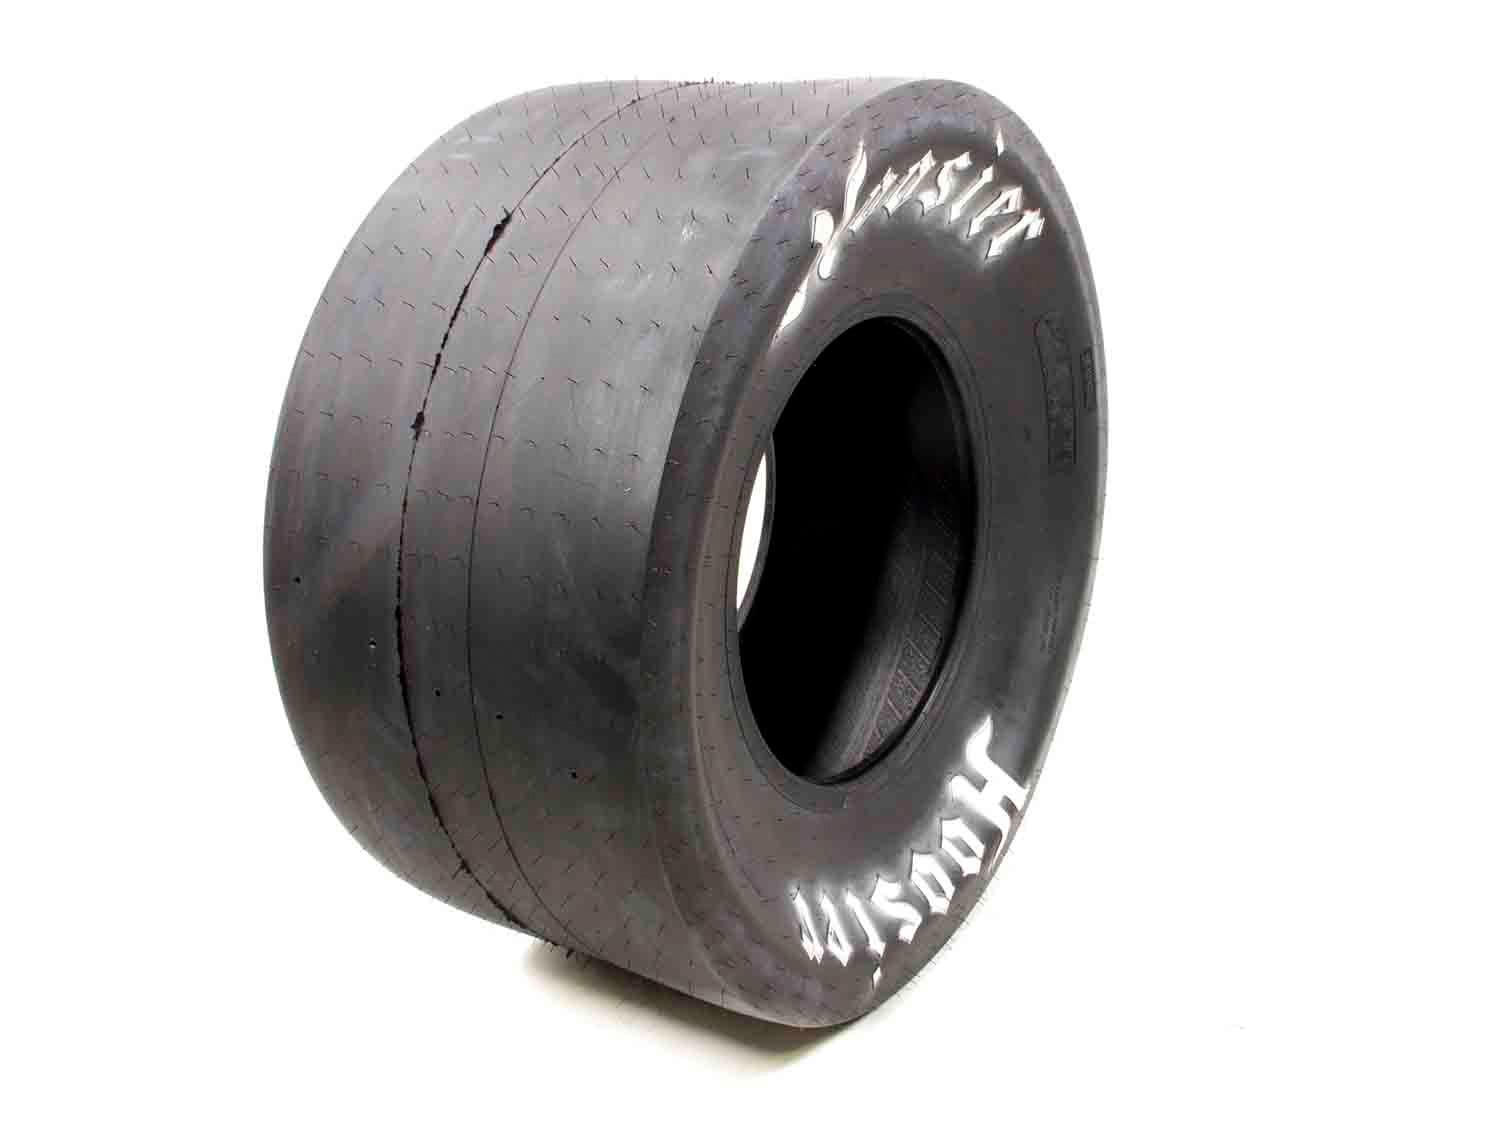 29.0/9-15 Drag Tire - Burlile Performance Products